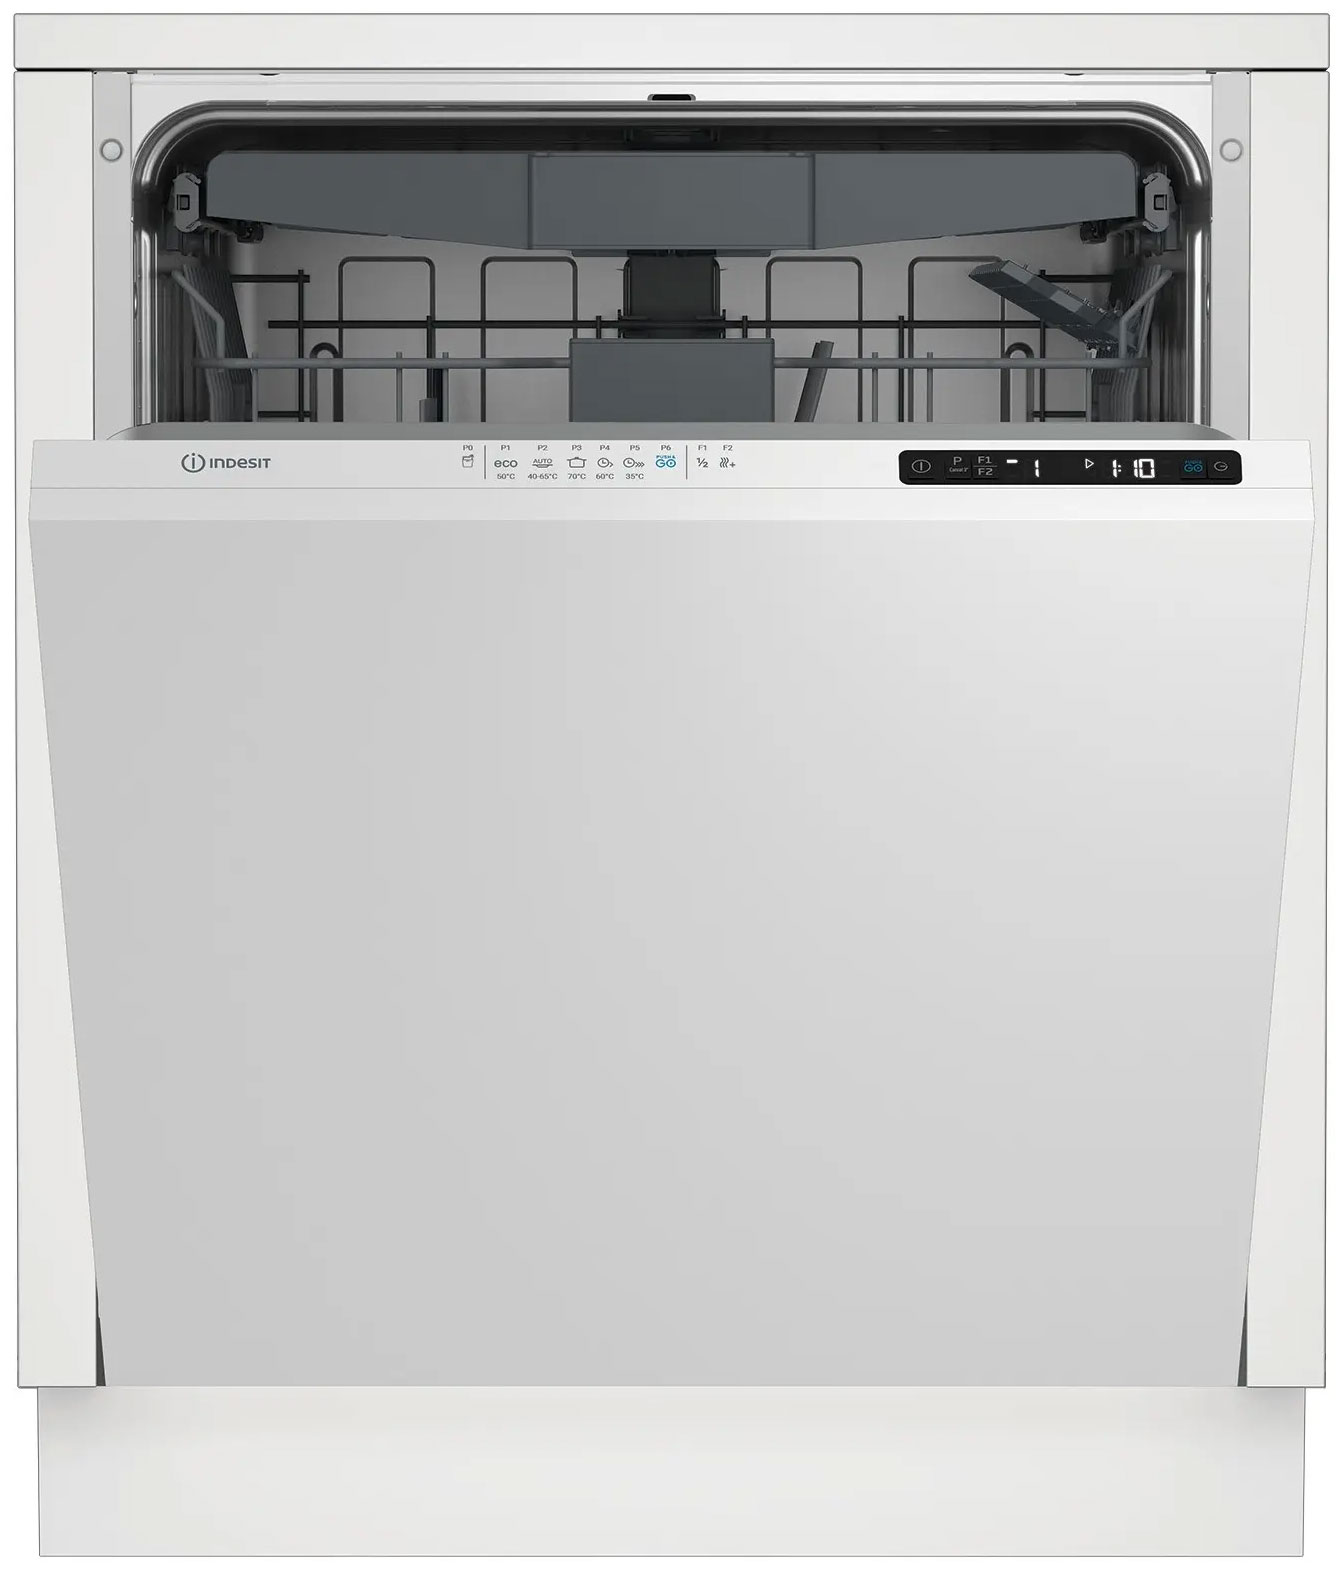 Встраиваемая посудомоечная машина Indesit DI 5C65 AED встраиваемая посудомоечная машина indesit di 3c49 b